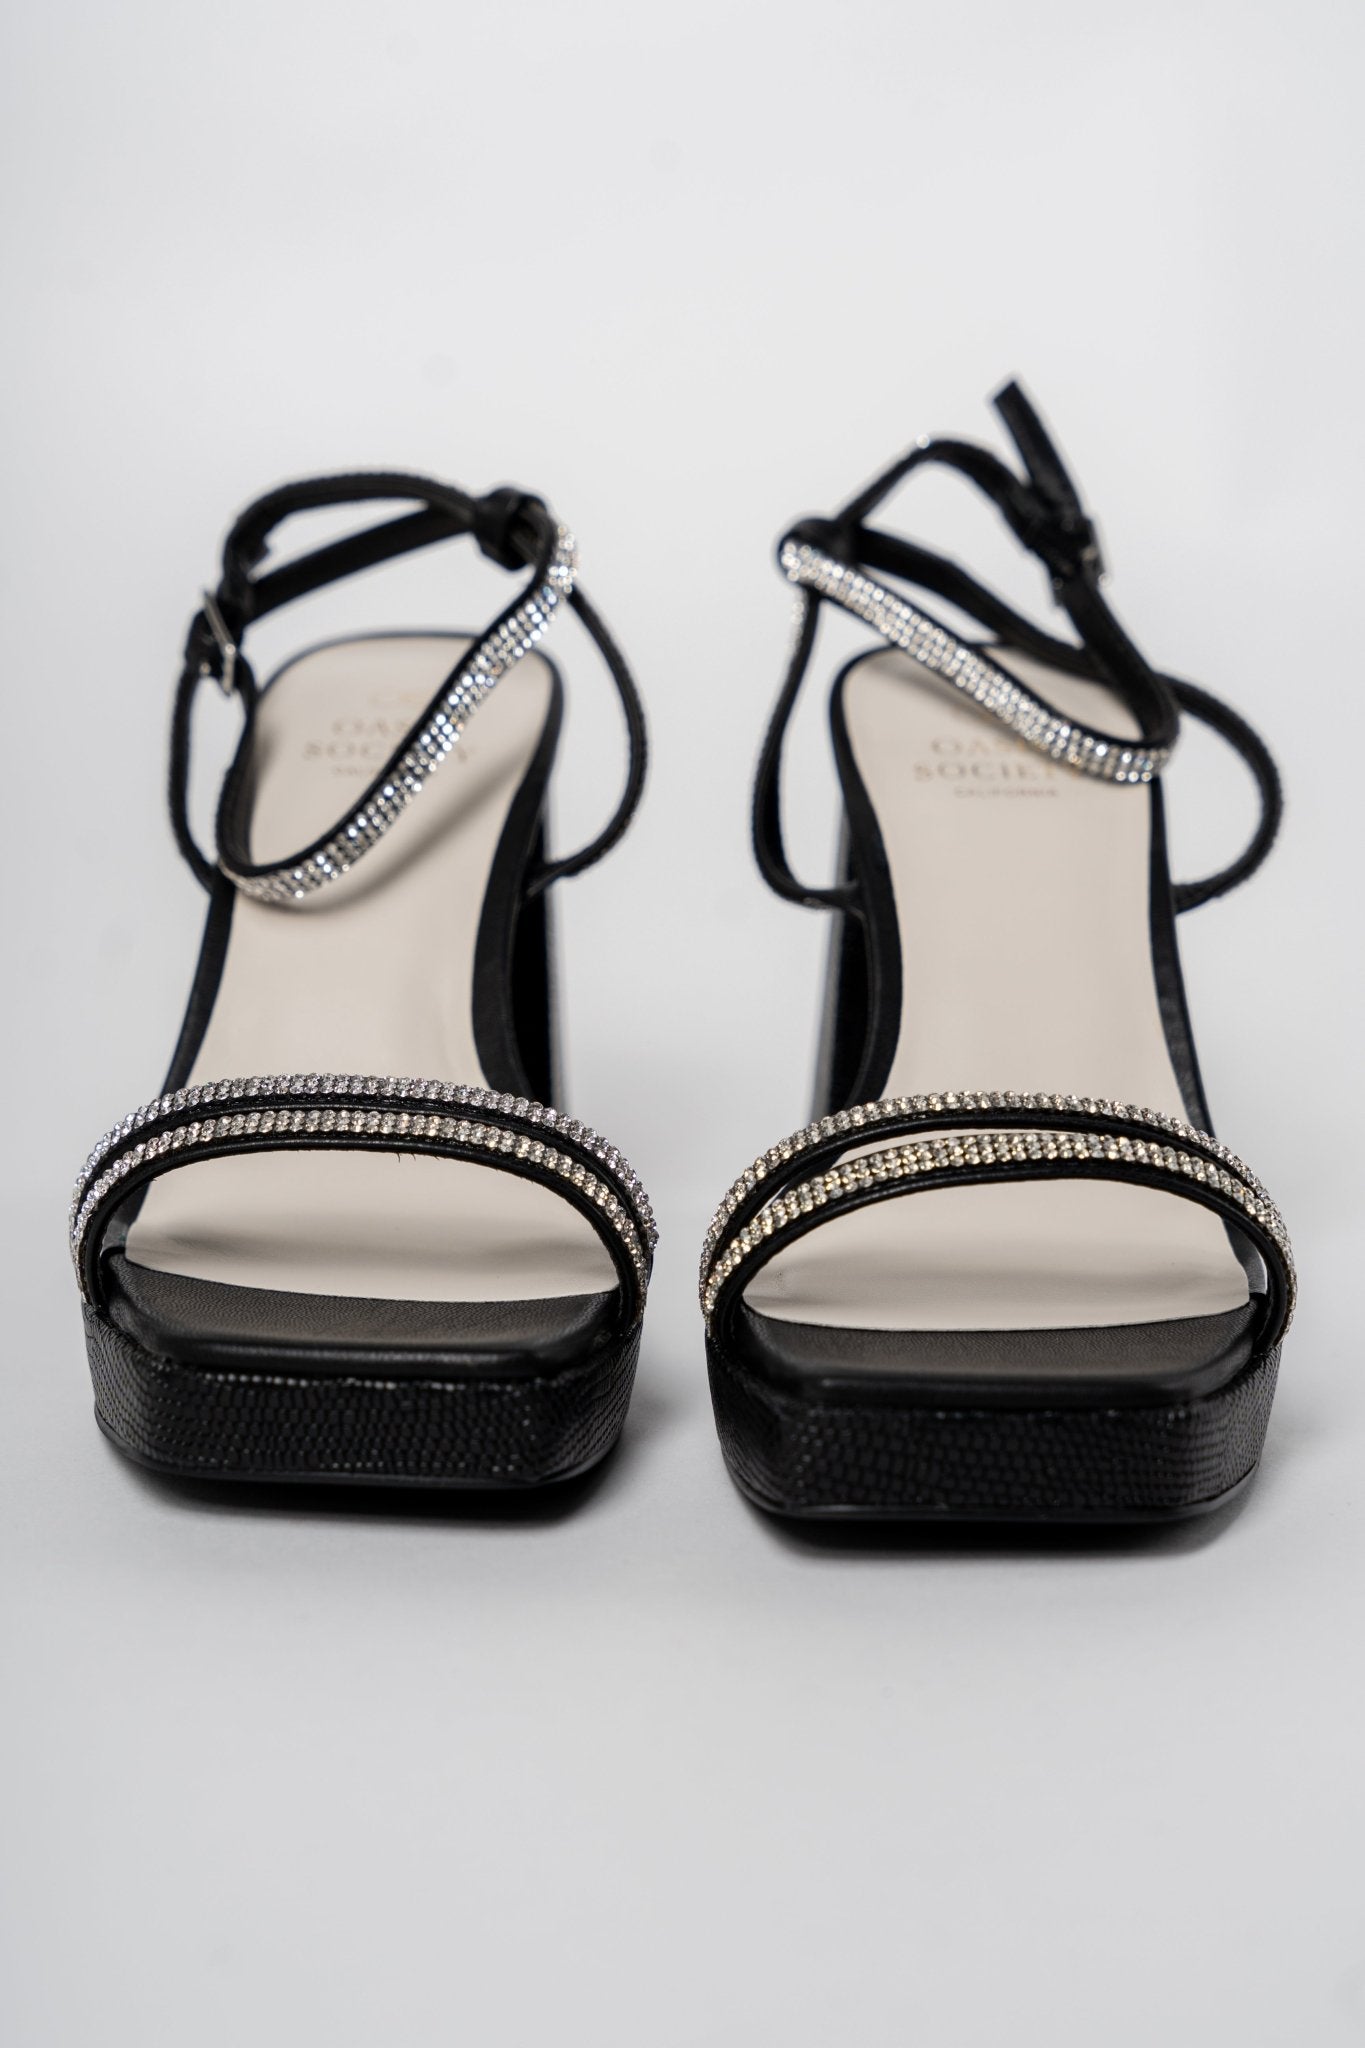 Suva rhinestone strappy heels black - Trendy shoes - Fashion Shoes at Lush Fashion Lounge Boutique in Oklahoma City